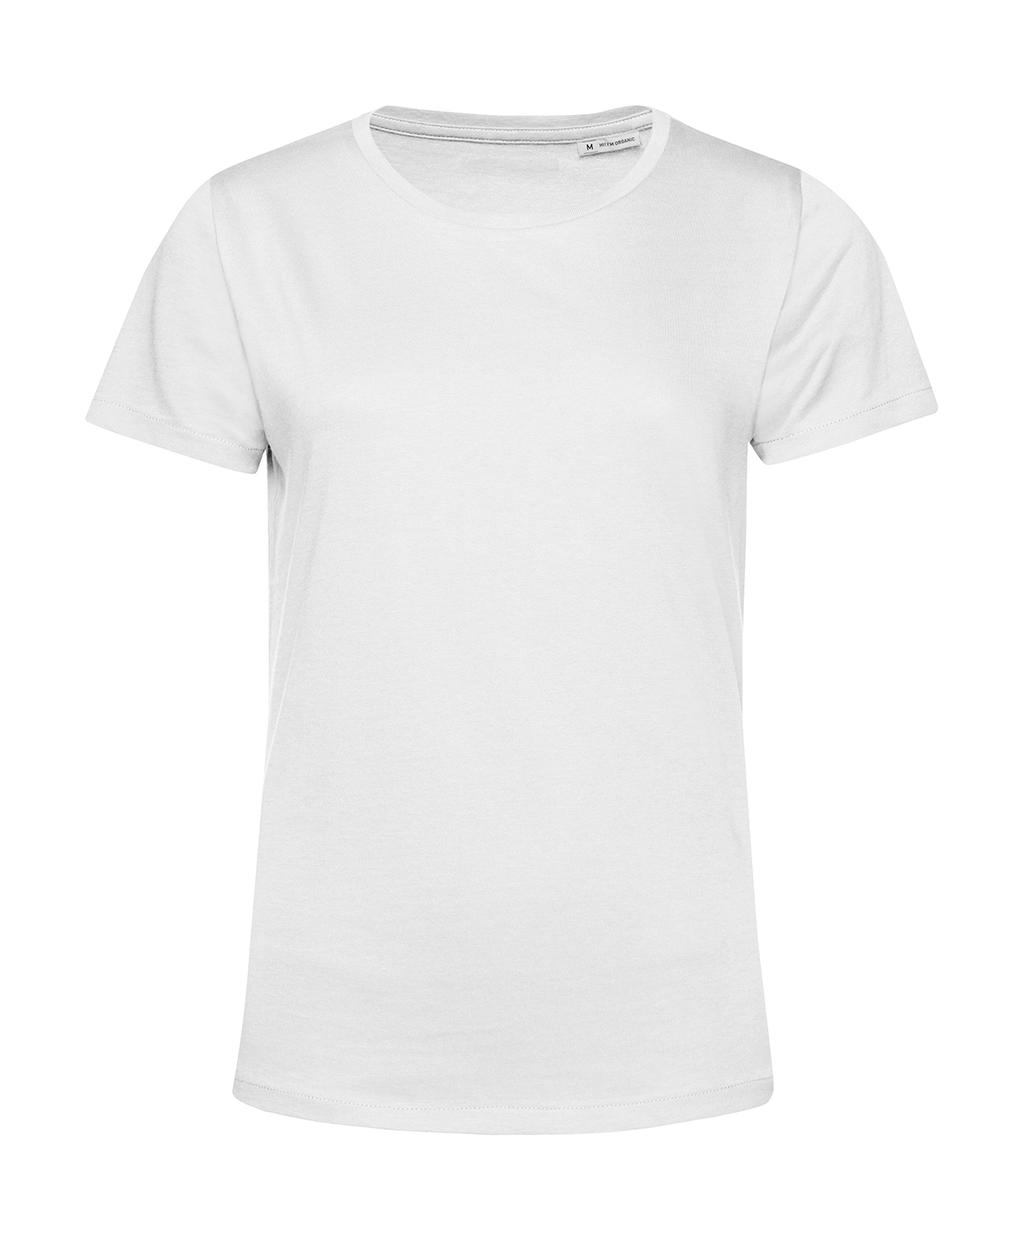 Tričko dámské BC Organic Inspire E150 - bílé, XXL